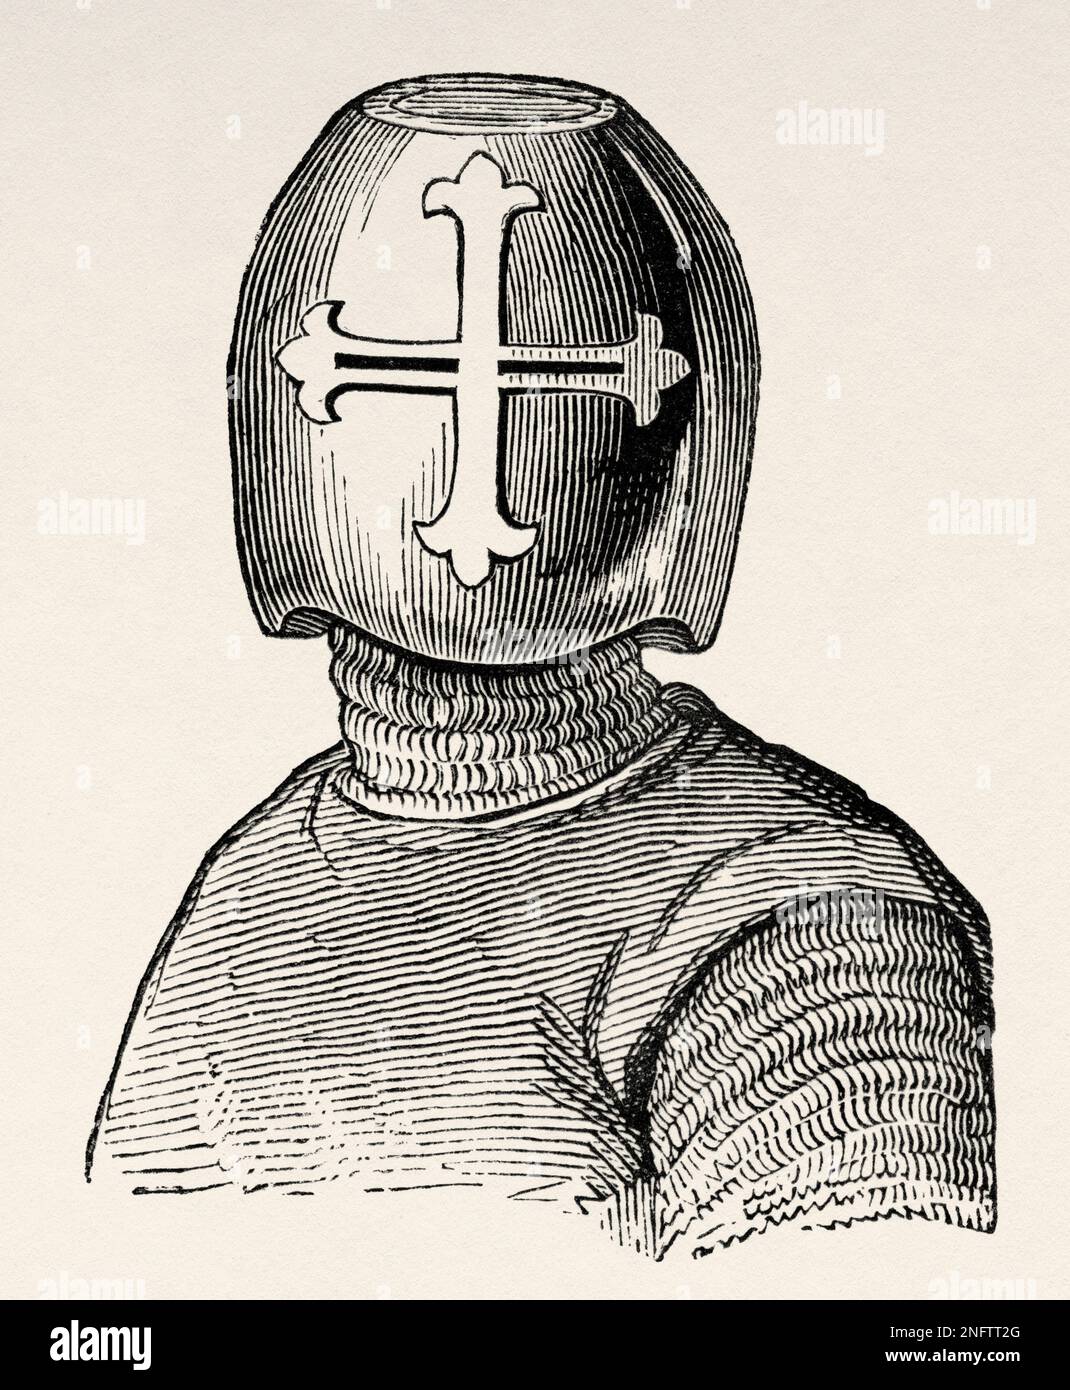 medieval knights helmets drawing